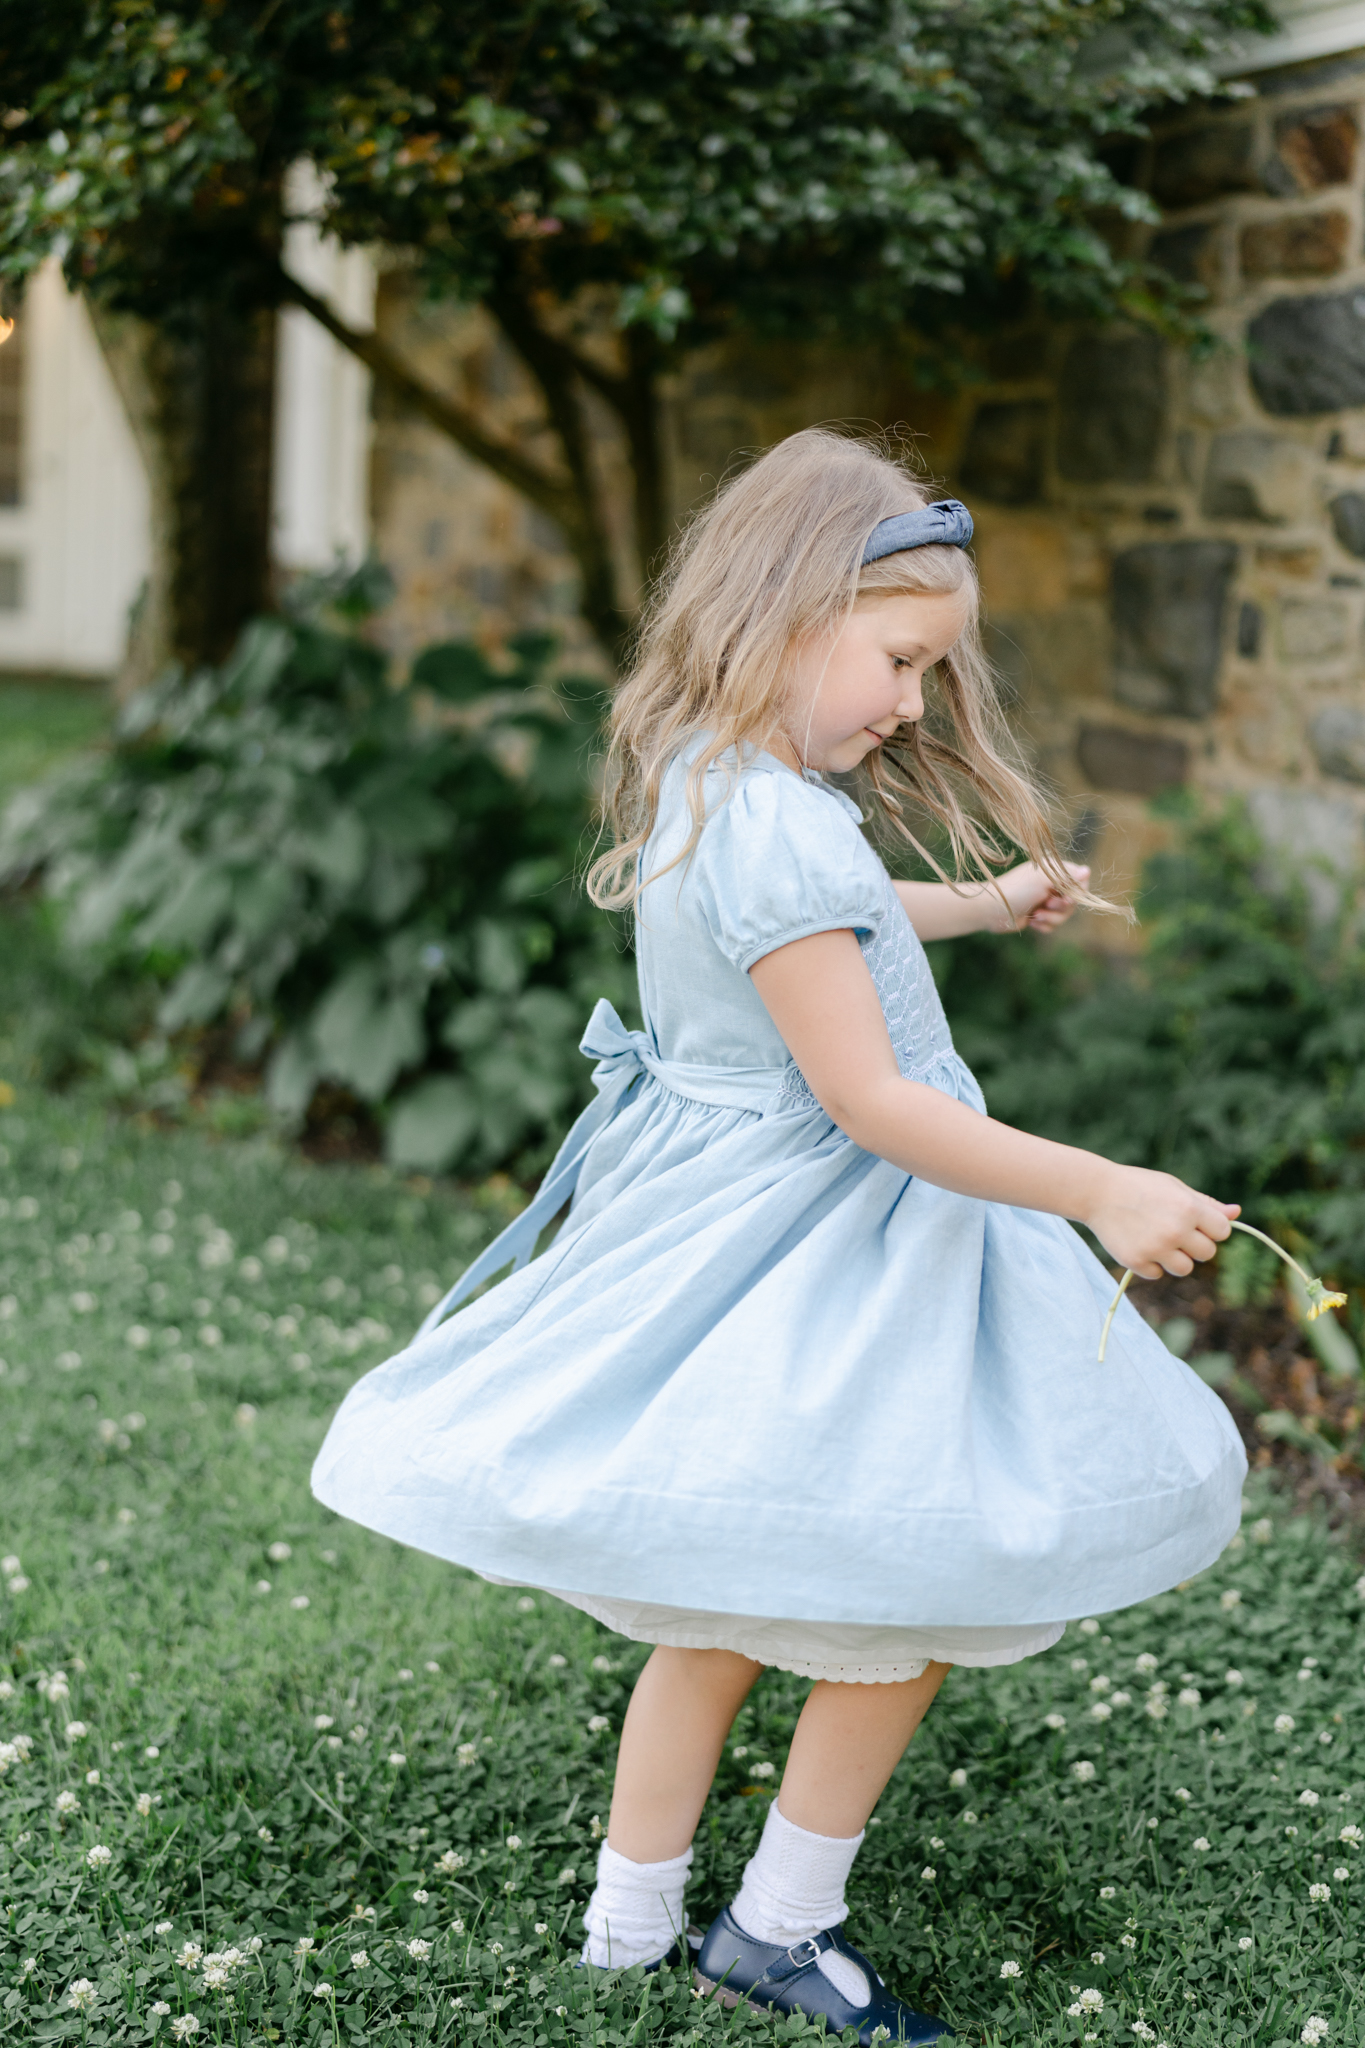 Little girl in blue dress twirling around